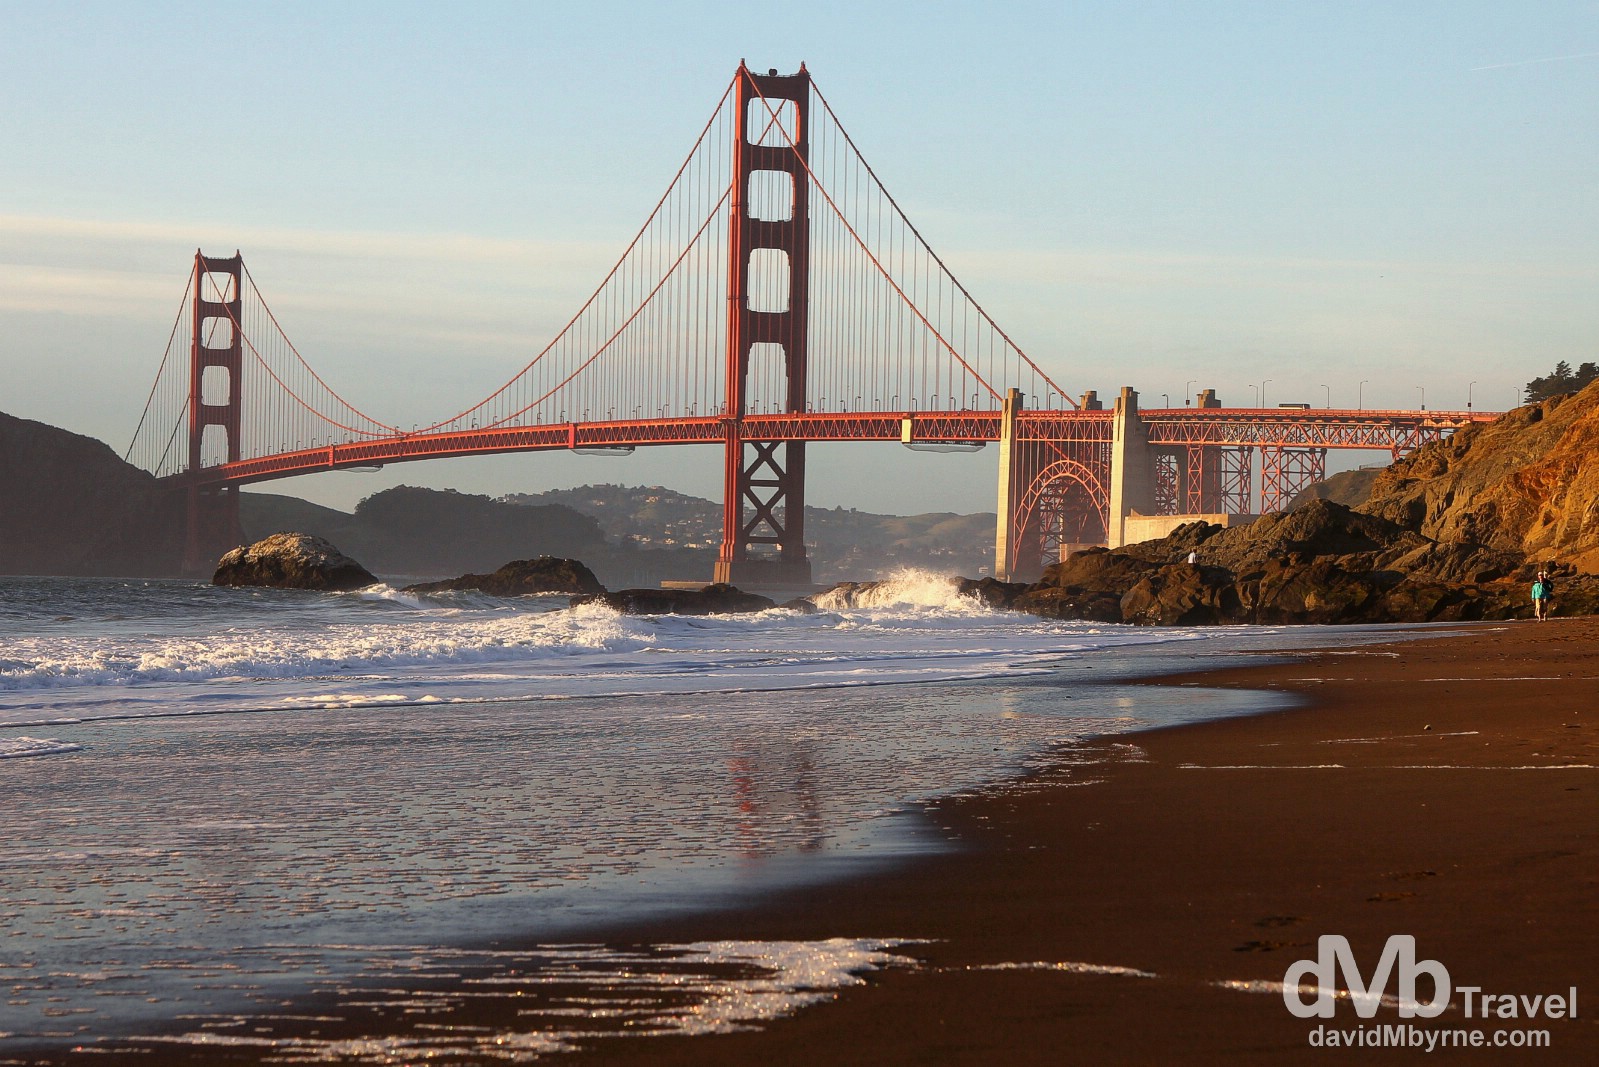 The Golden Gate Bridge as seen from Baker Beach nearing sunset, San Francisco, California, USA. April 10th 2013.